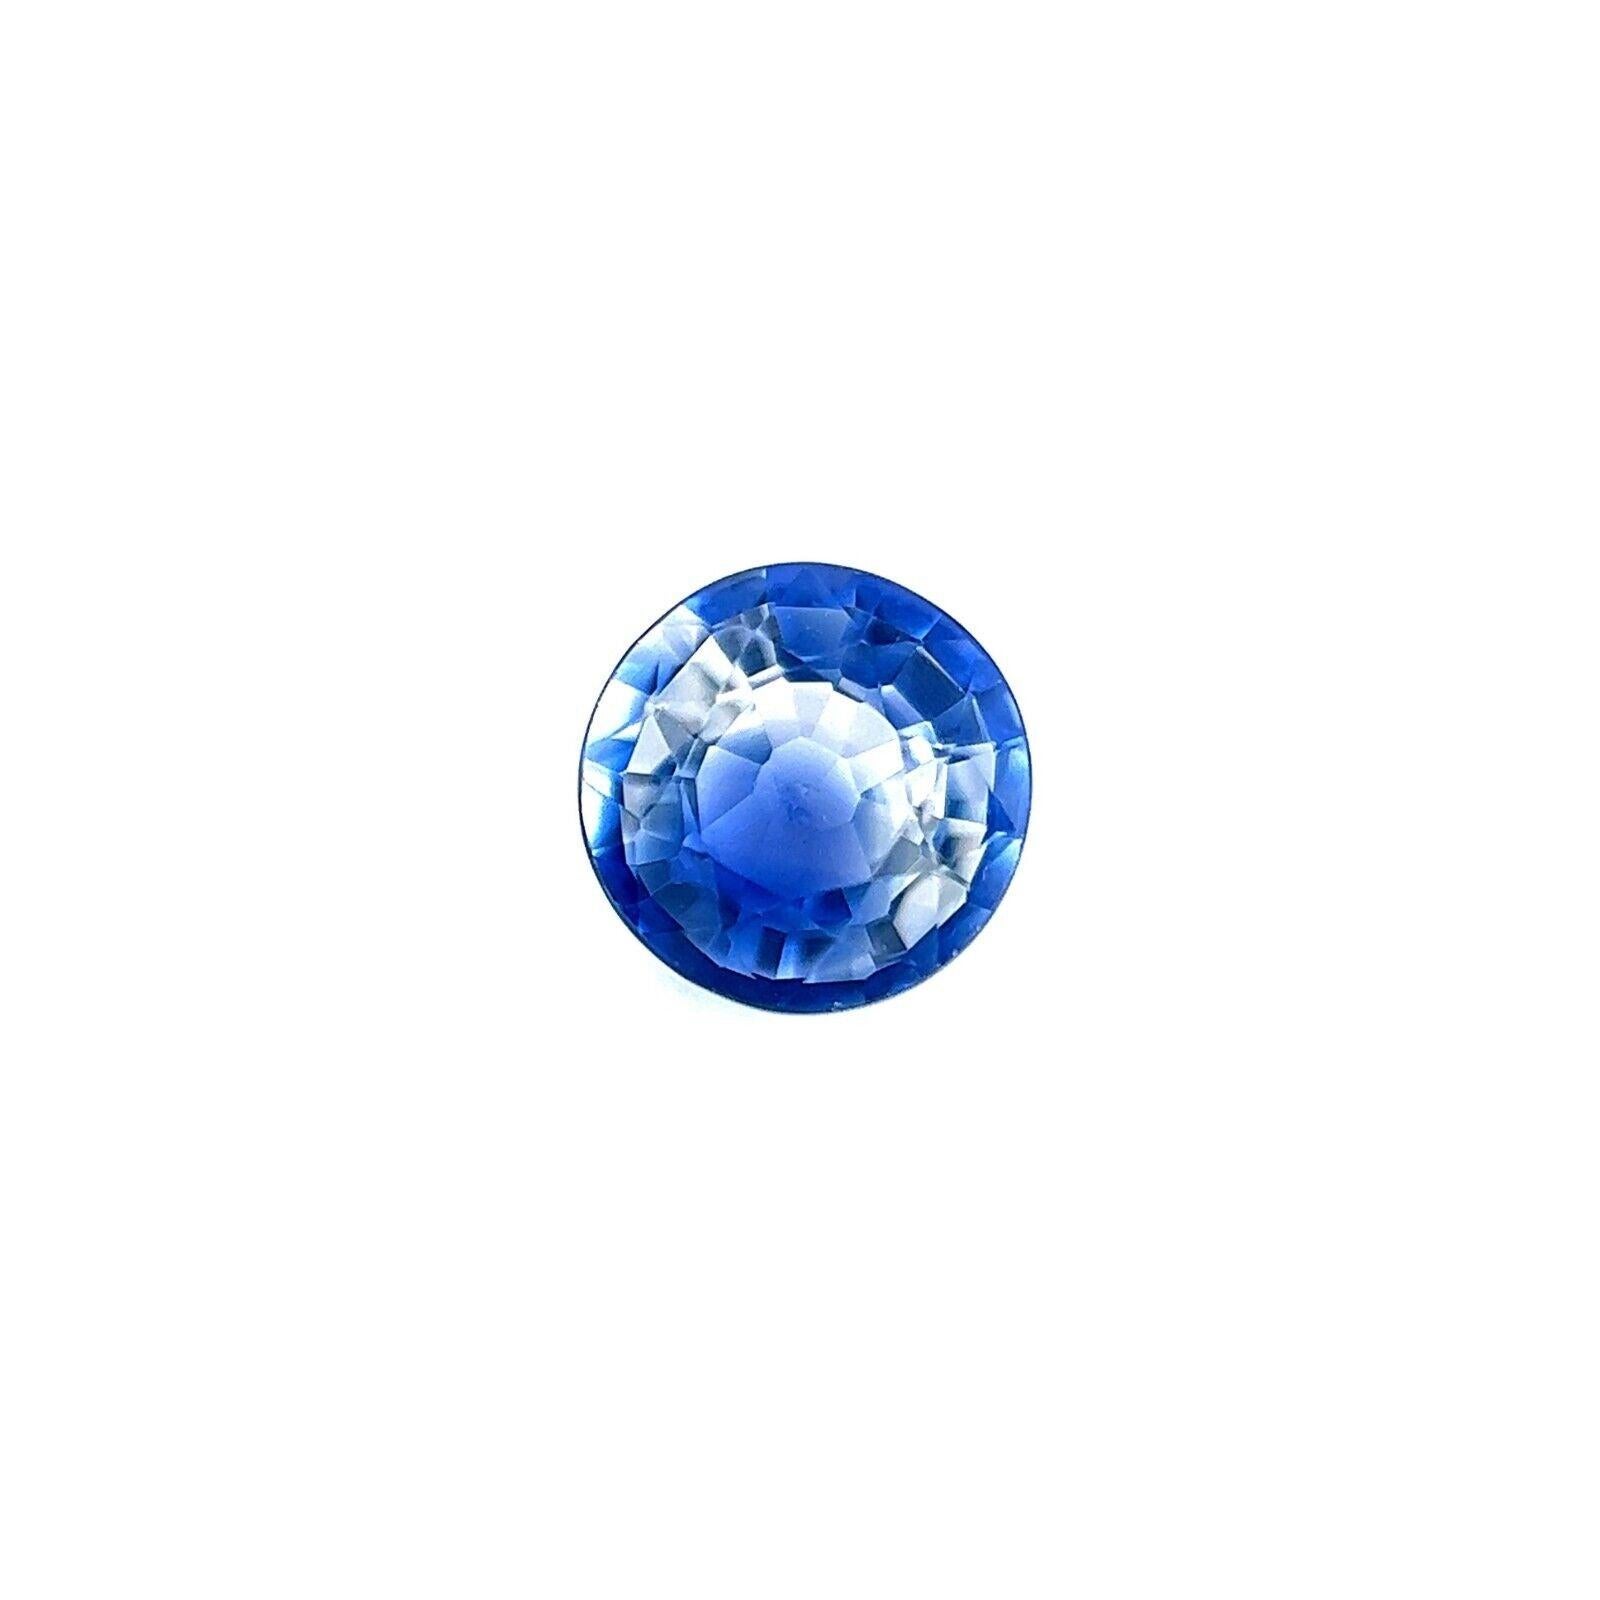 Bi Colour Ceylon Sapphire 0.68ct Blue White Natural Round Cut Rare Gem 5.3mm VS

Unique Natural Bi Colour Blue & White Ceylon Sapphire Gemstone.
0.68 Carat with a beautiful blue white bi colour effect and very good clarity, a very clean stone.